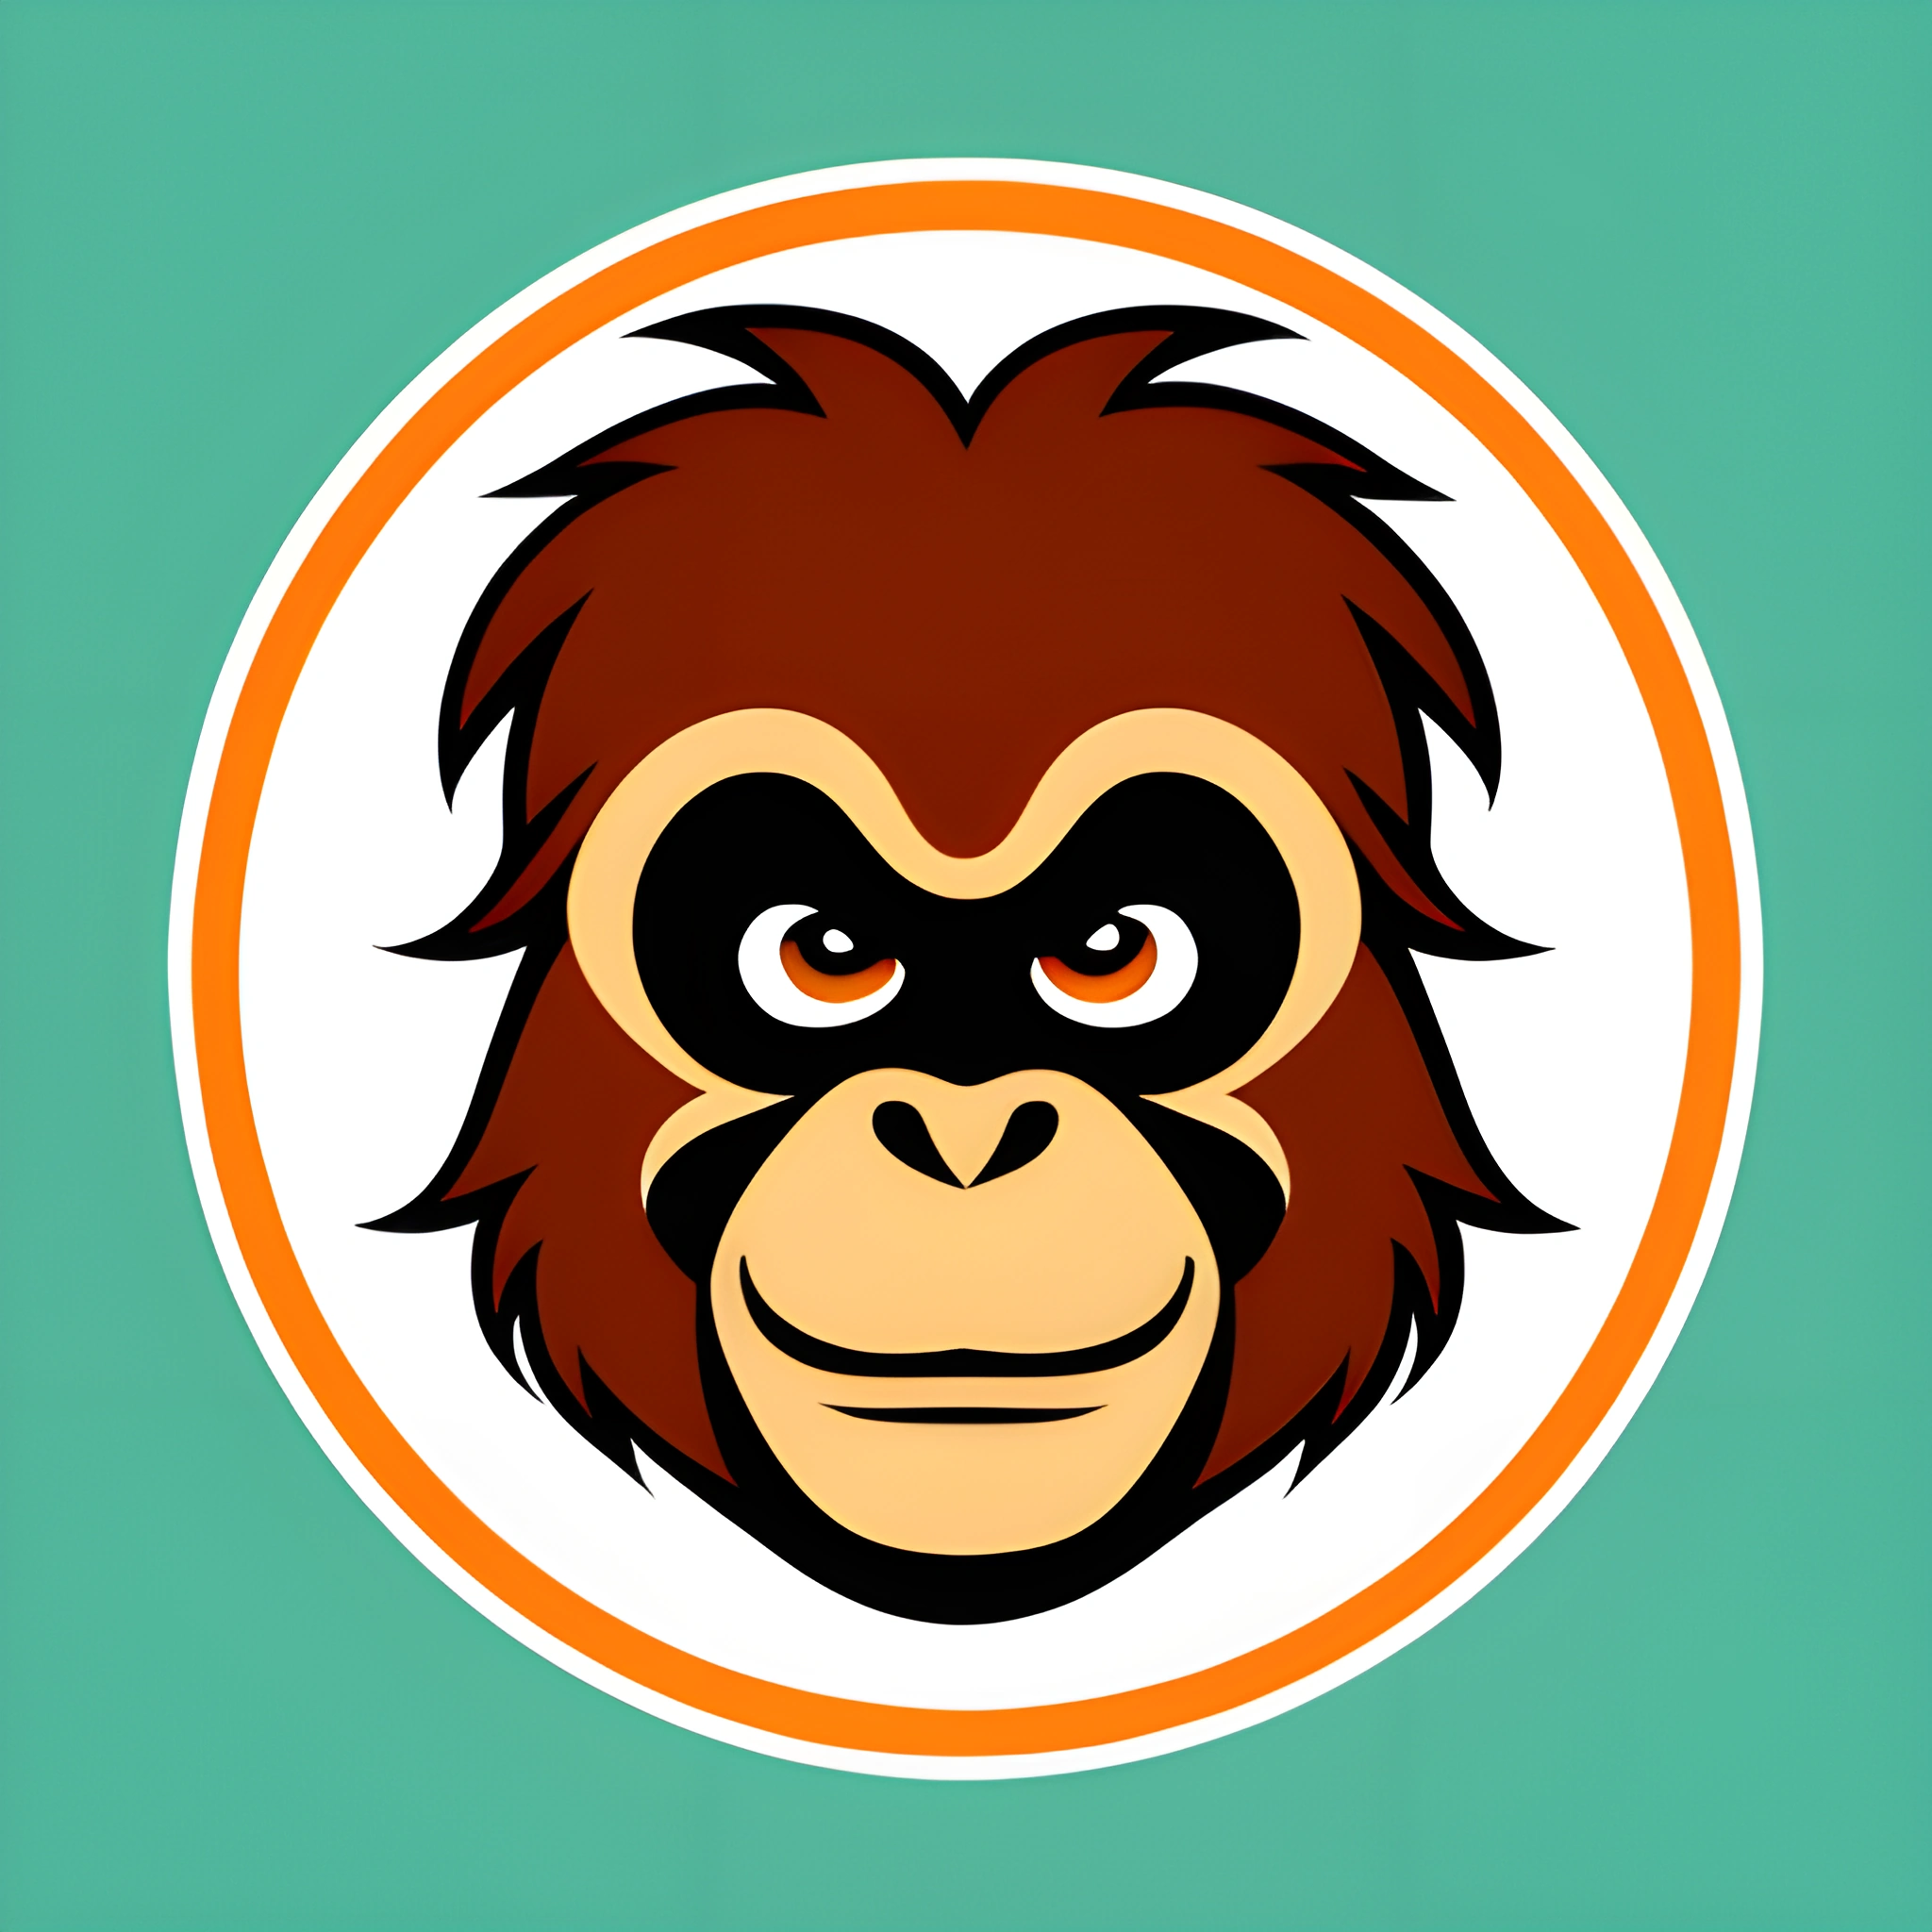 monkey face with a round orange border around it